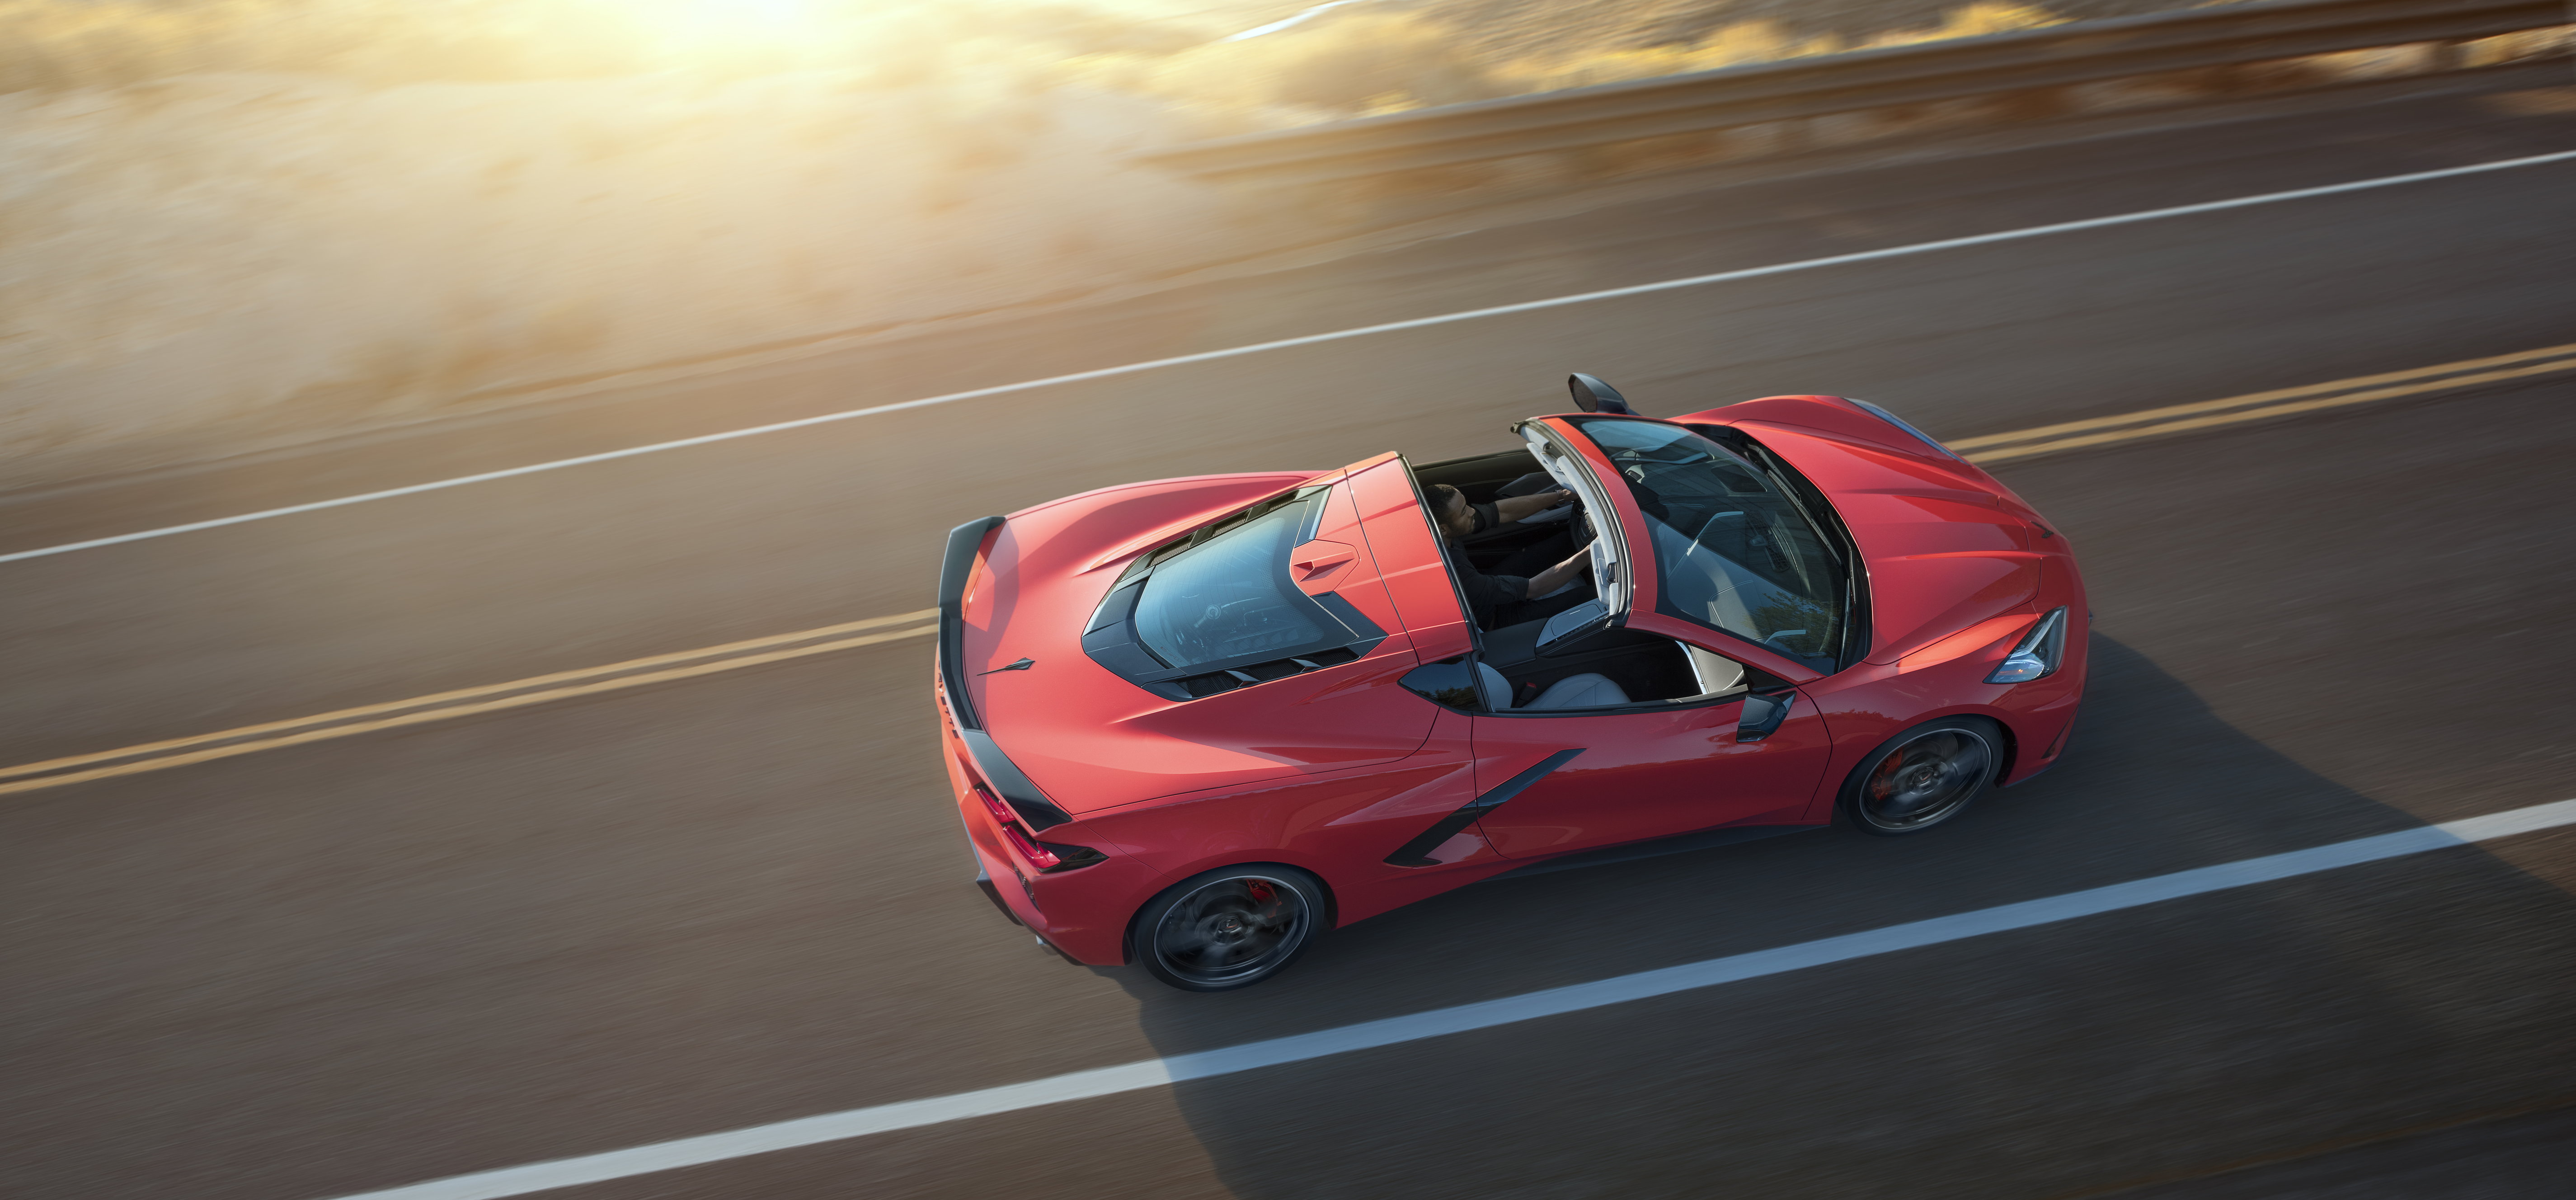 2020 Corvette HD Wallpapers  Top Free 2020 Corvette HD Backgrounds   WallpaperAccess